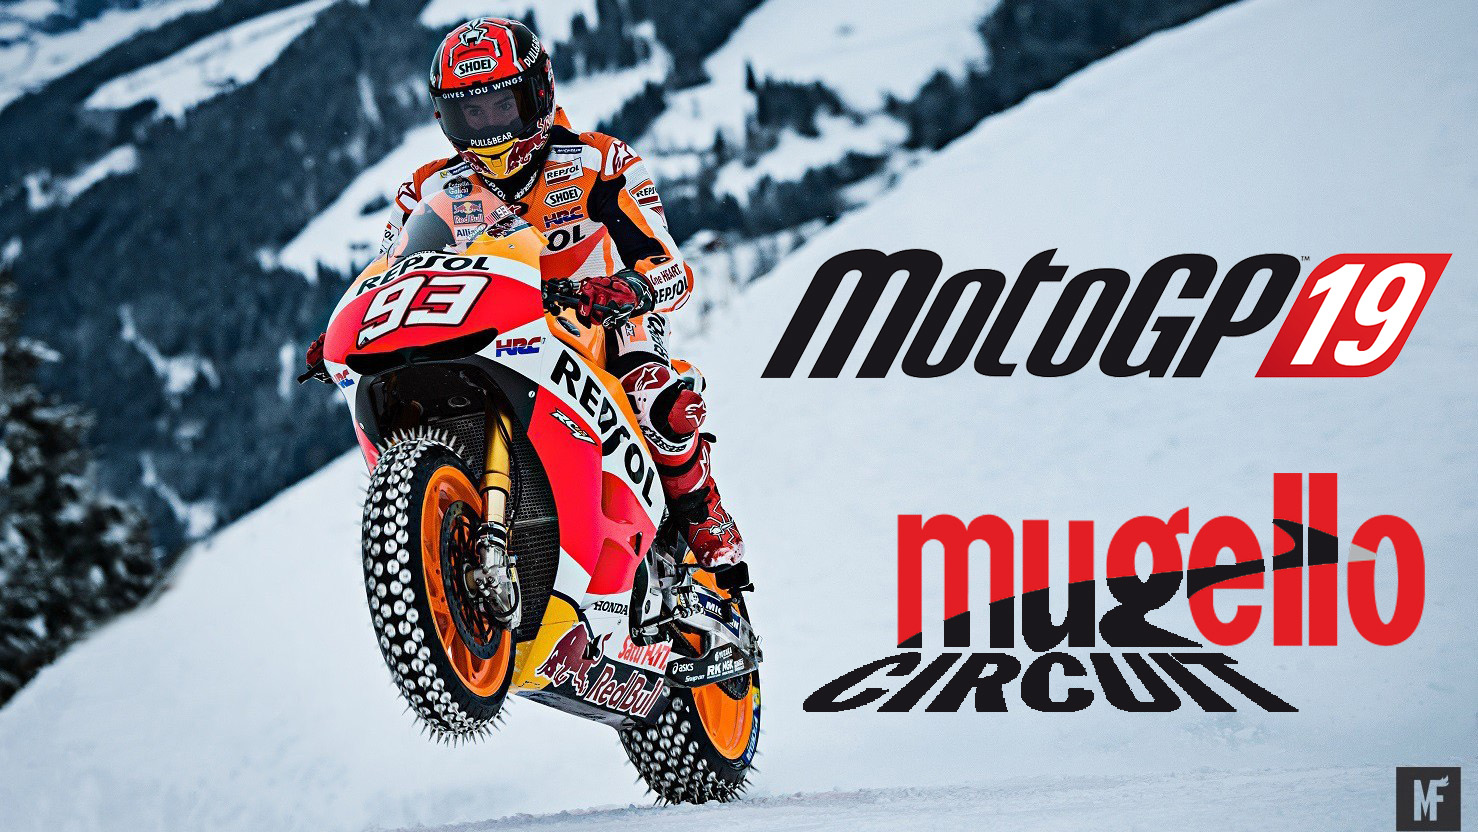 Motogp 19 | Mugello SNOW Edition | Version 1 | By LEONE 291